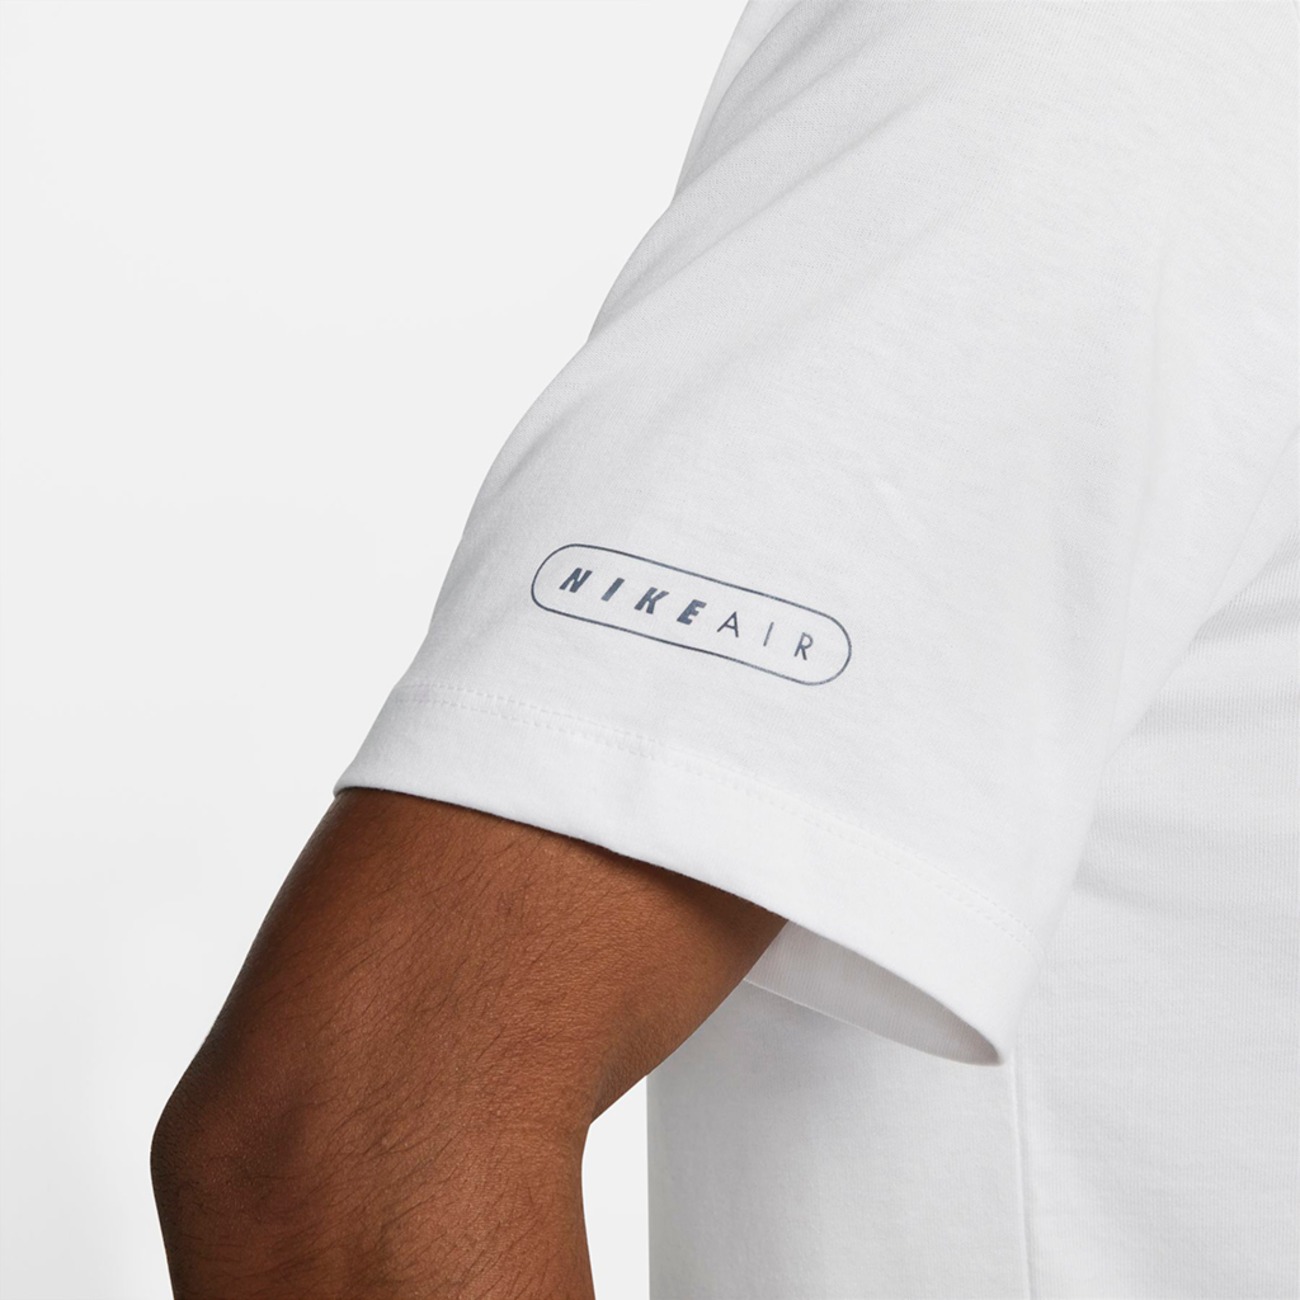 Camiseta Nike Air Masculina - Foto 4